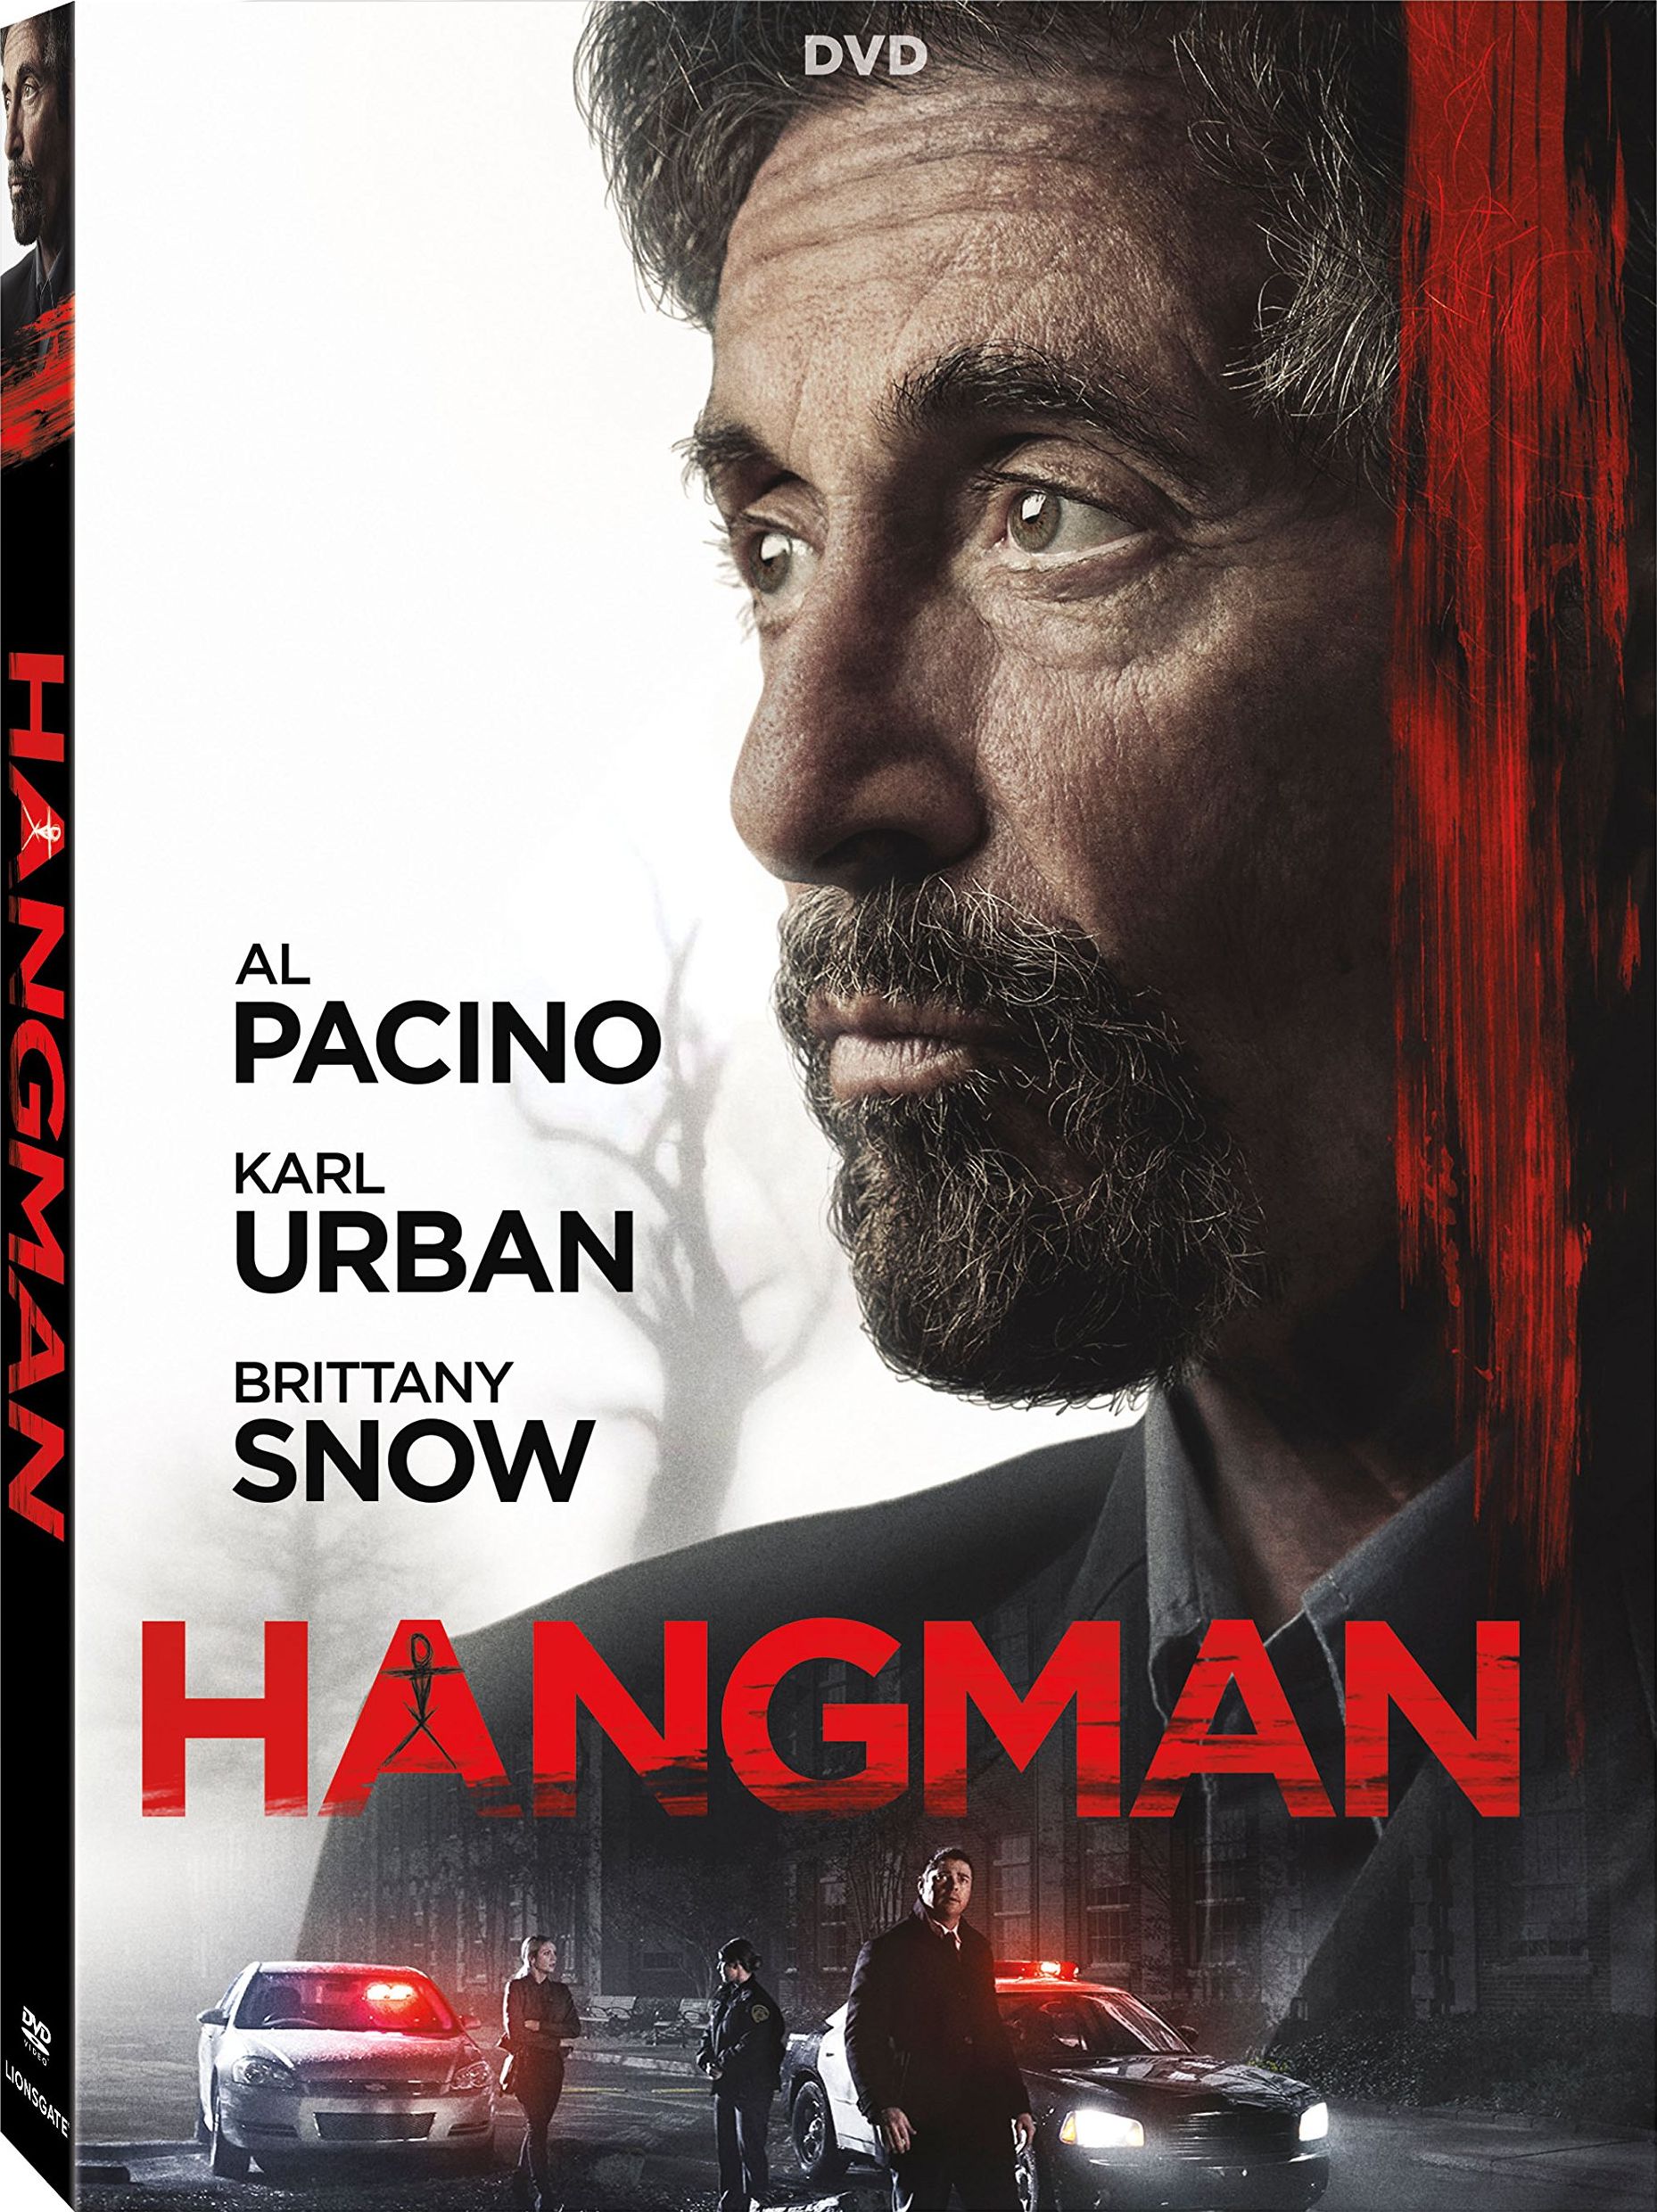 Hangman DVD Release Date February 27, 2018